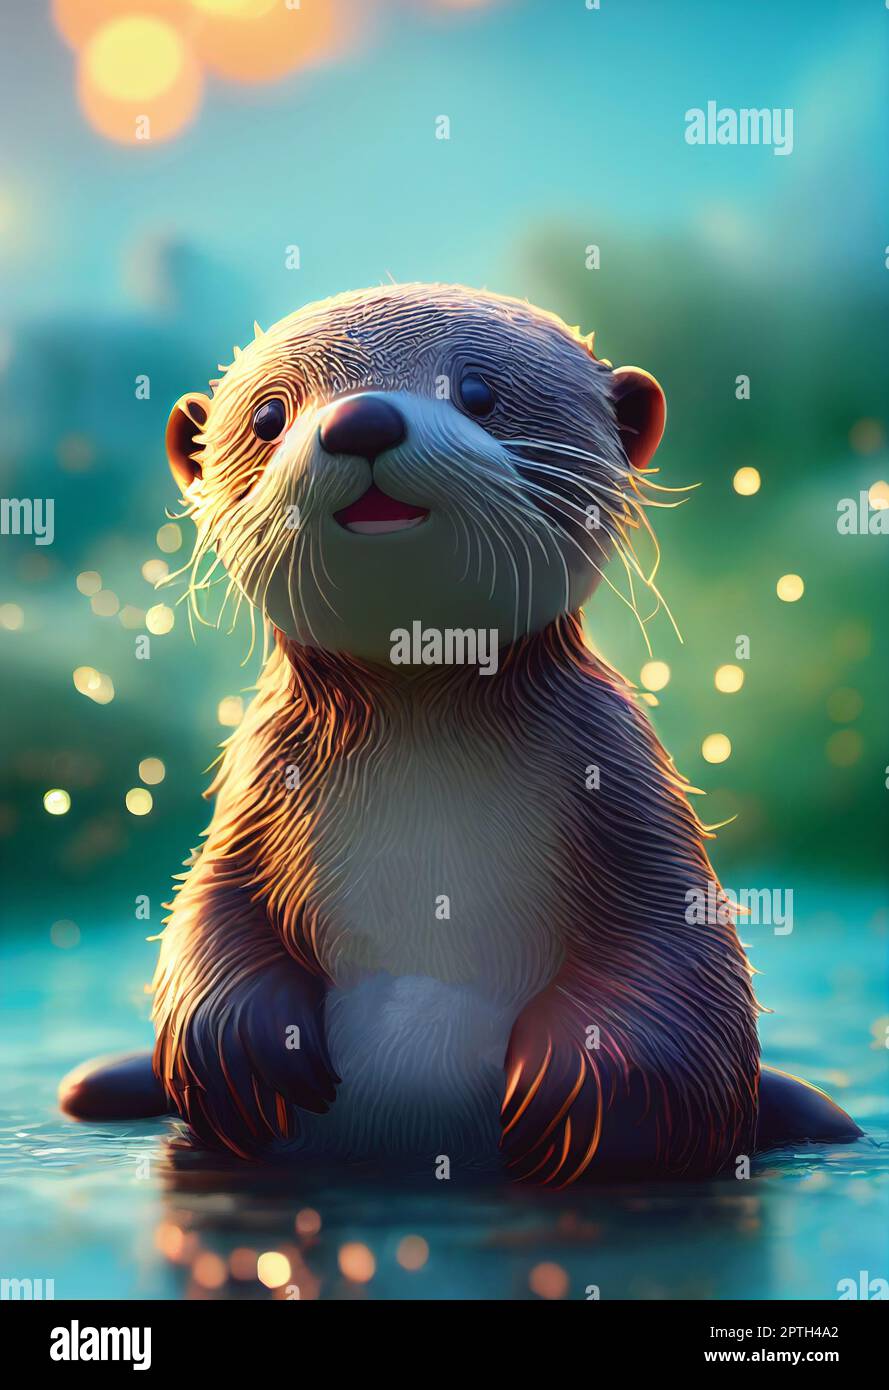 Portrait of a cute baby sea otter. Digital art 3D illustration in ...